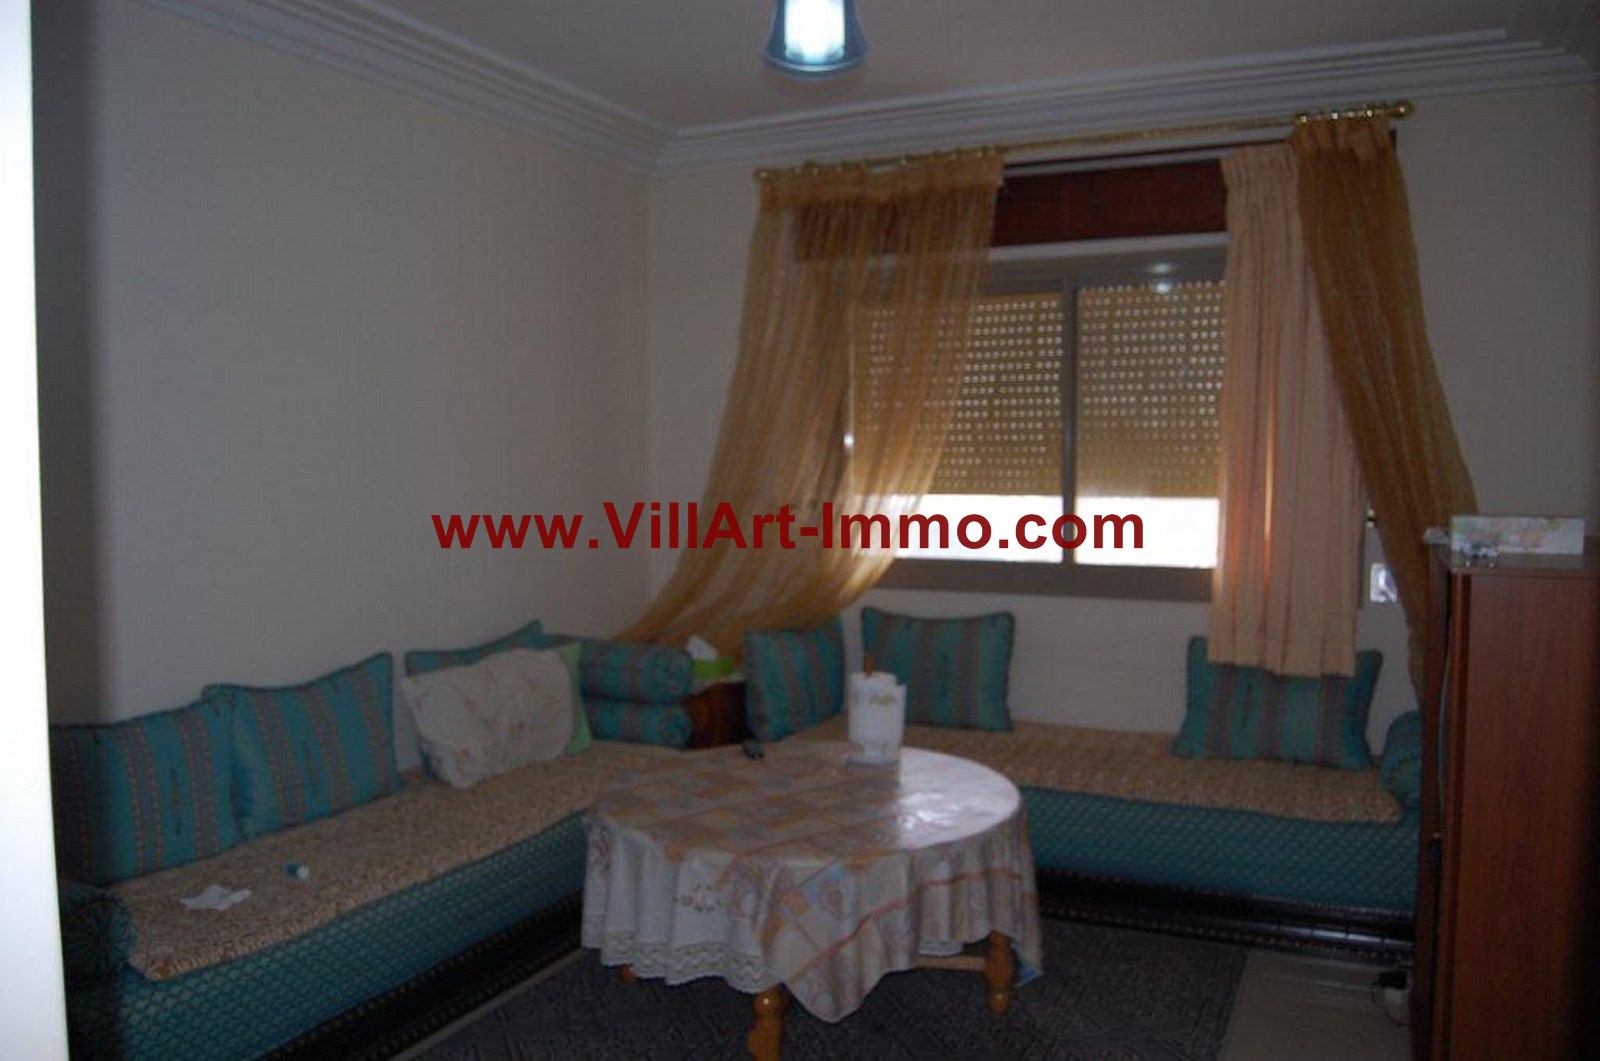 5-Vente-Appartement-Tanger-Iberia-Salon 2-VA295-Villart immo